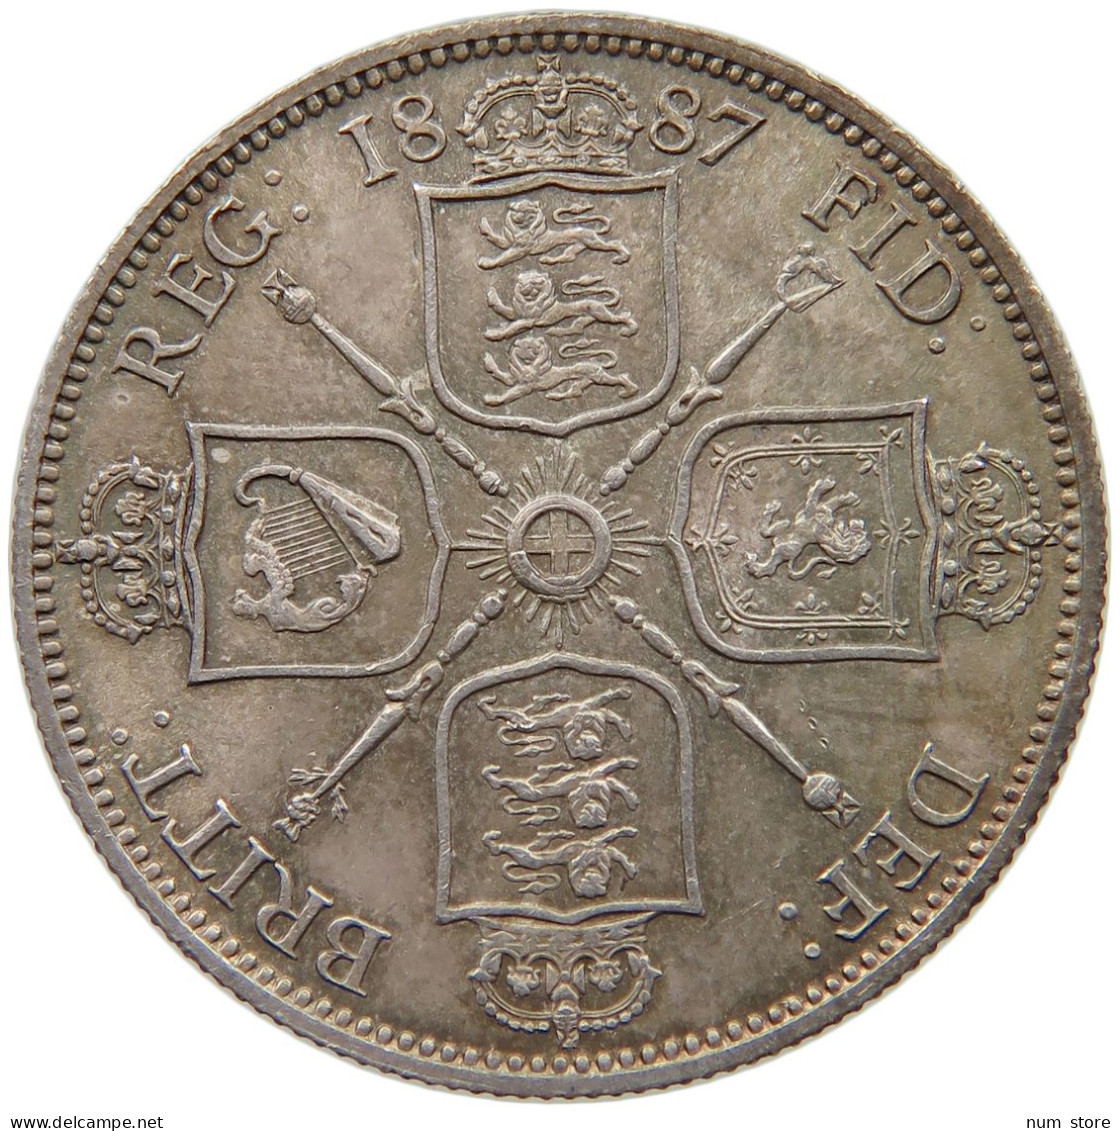 GREAT BRITAIN FLORIN 1887 Victoria 1837-1901 #t139 0161 - J. 1 Florin / 2 Shillings